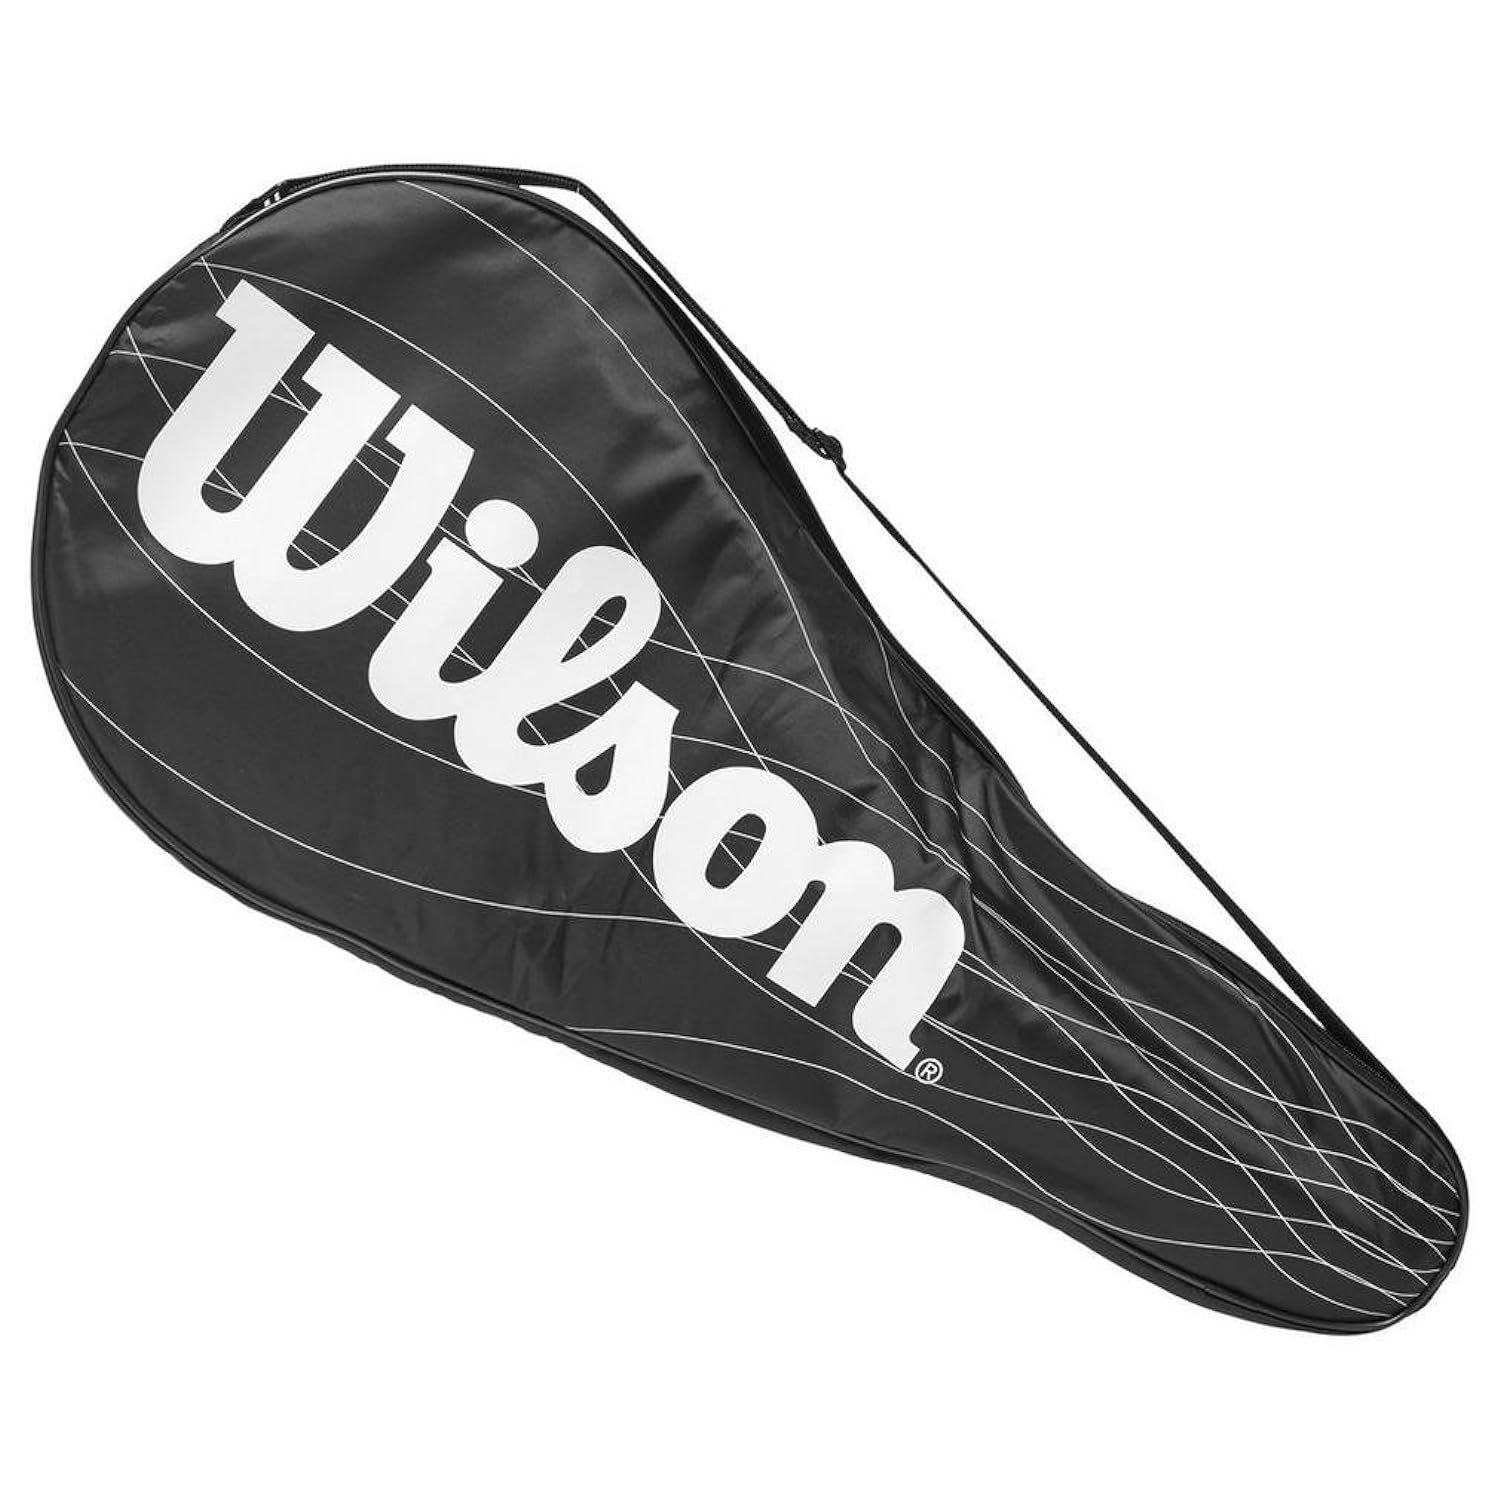 WILSON Performance Racket Cover - $44.99